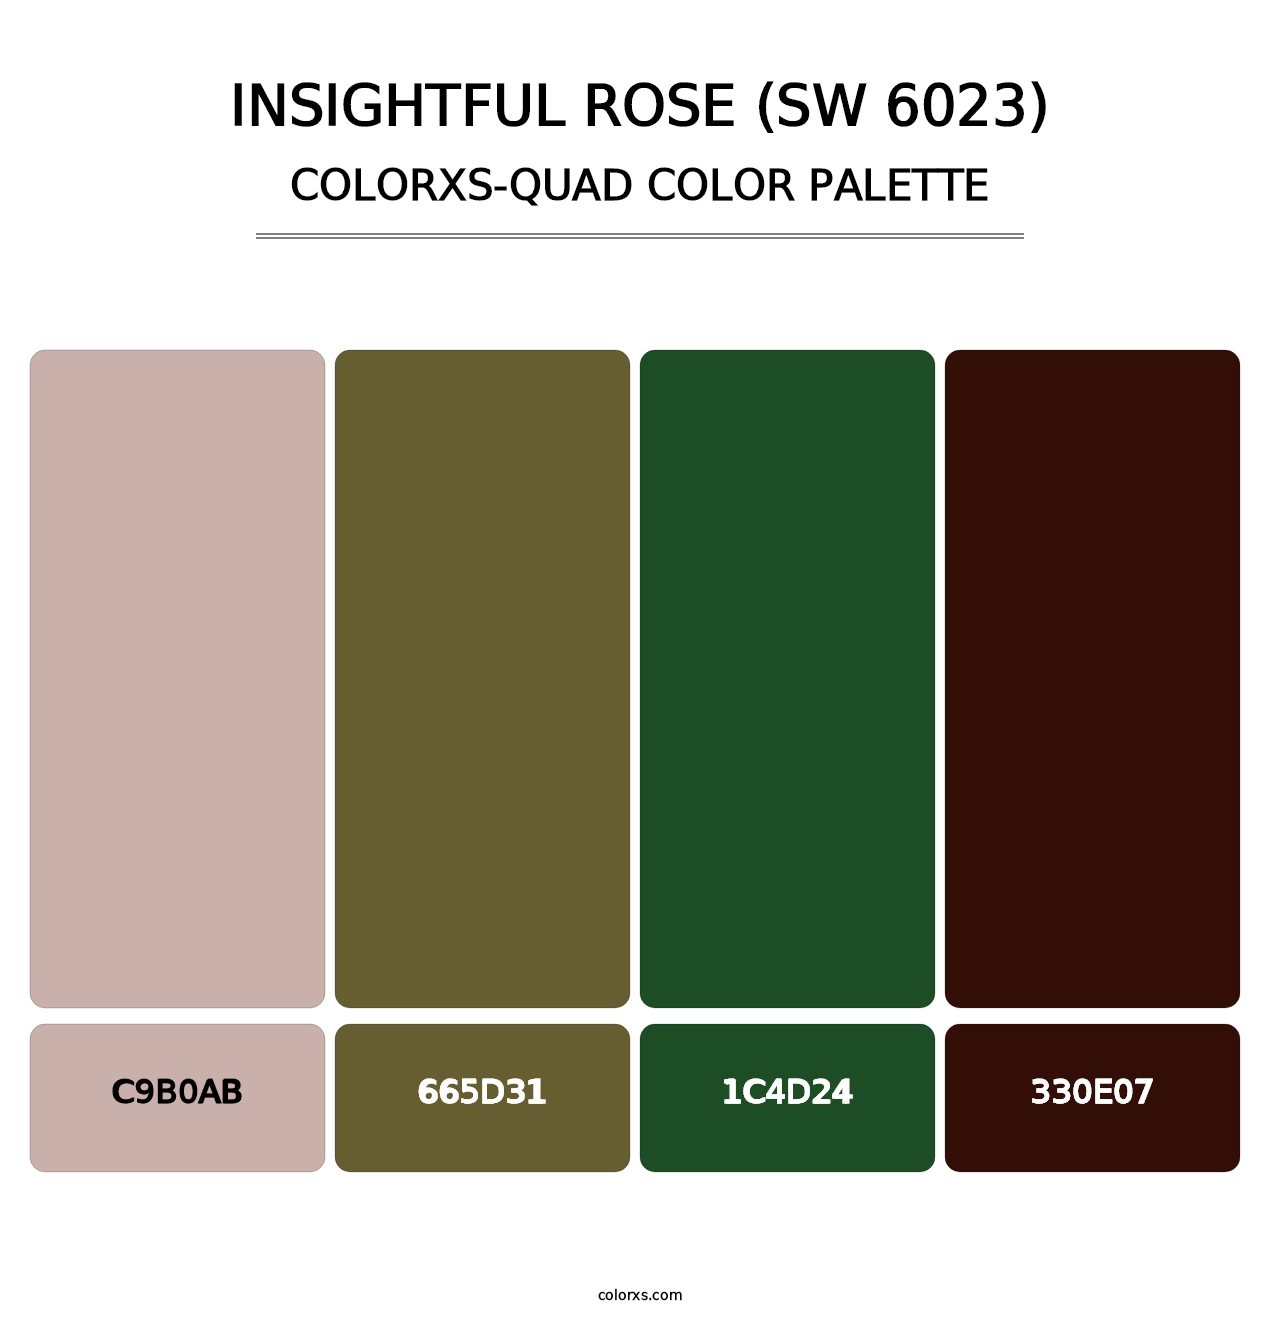 Insightful Rose (SW 6023) - Colorxs Quad Palette